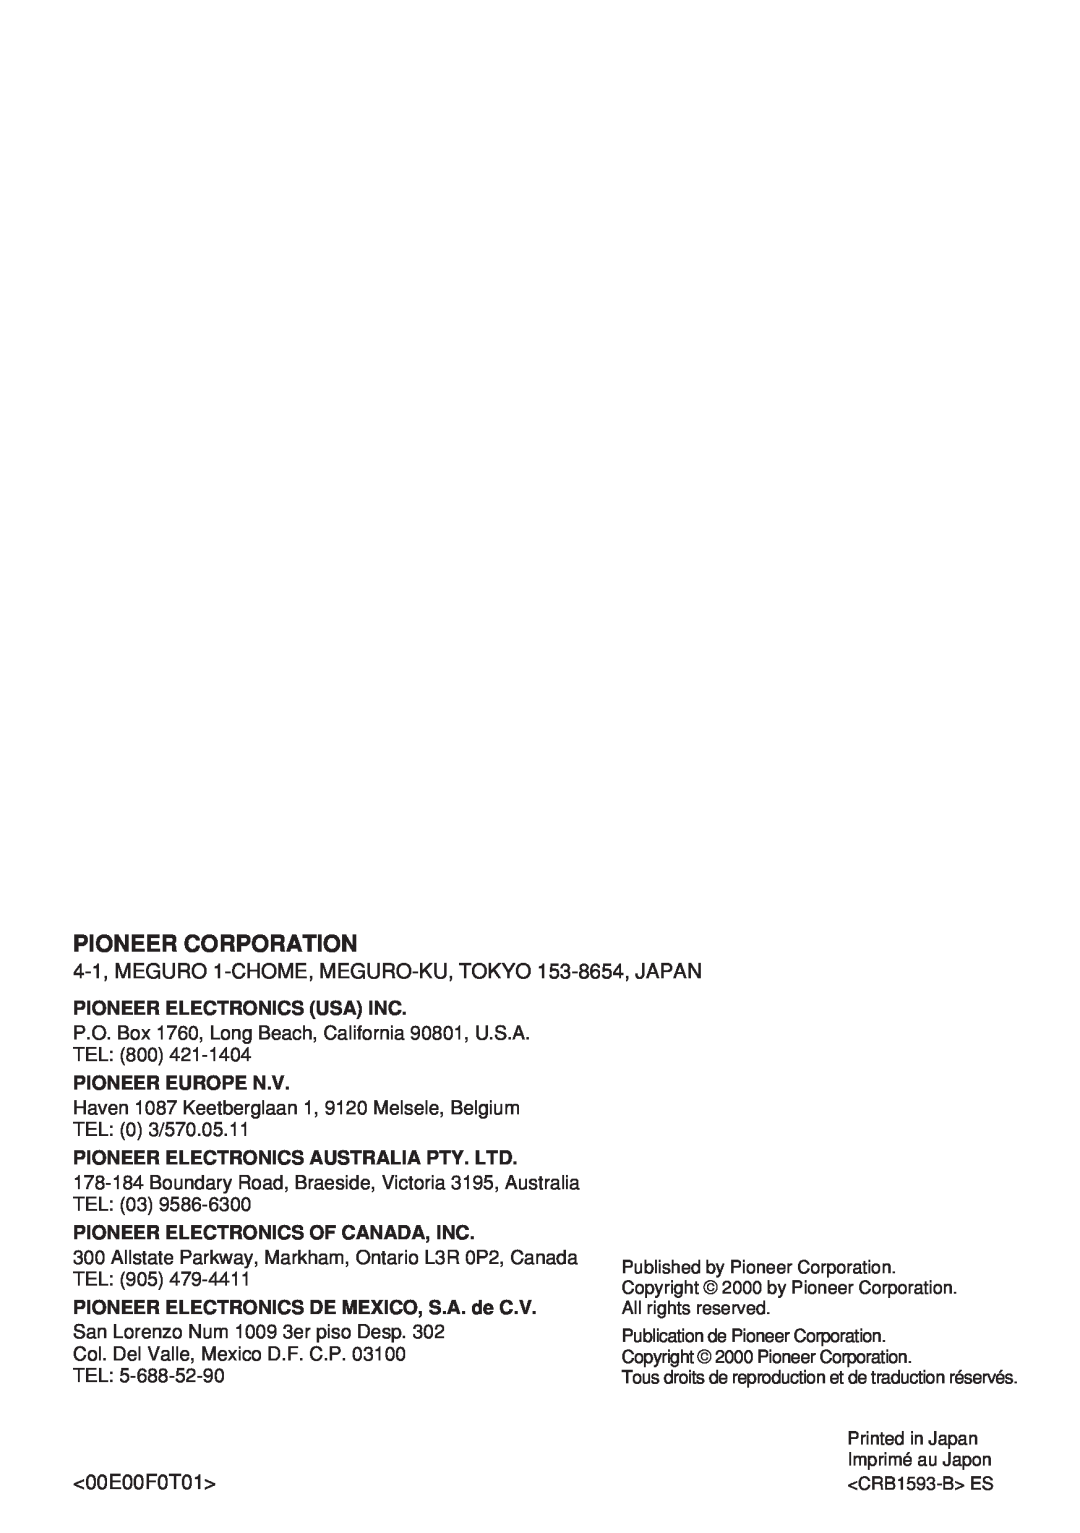 Pioneer AVM-P9000 owner manual Pioneer Corporation, <00E00F0T01>, Pioneer Electronics Usa Inc, Pioneer Europe N.V 